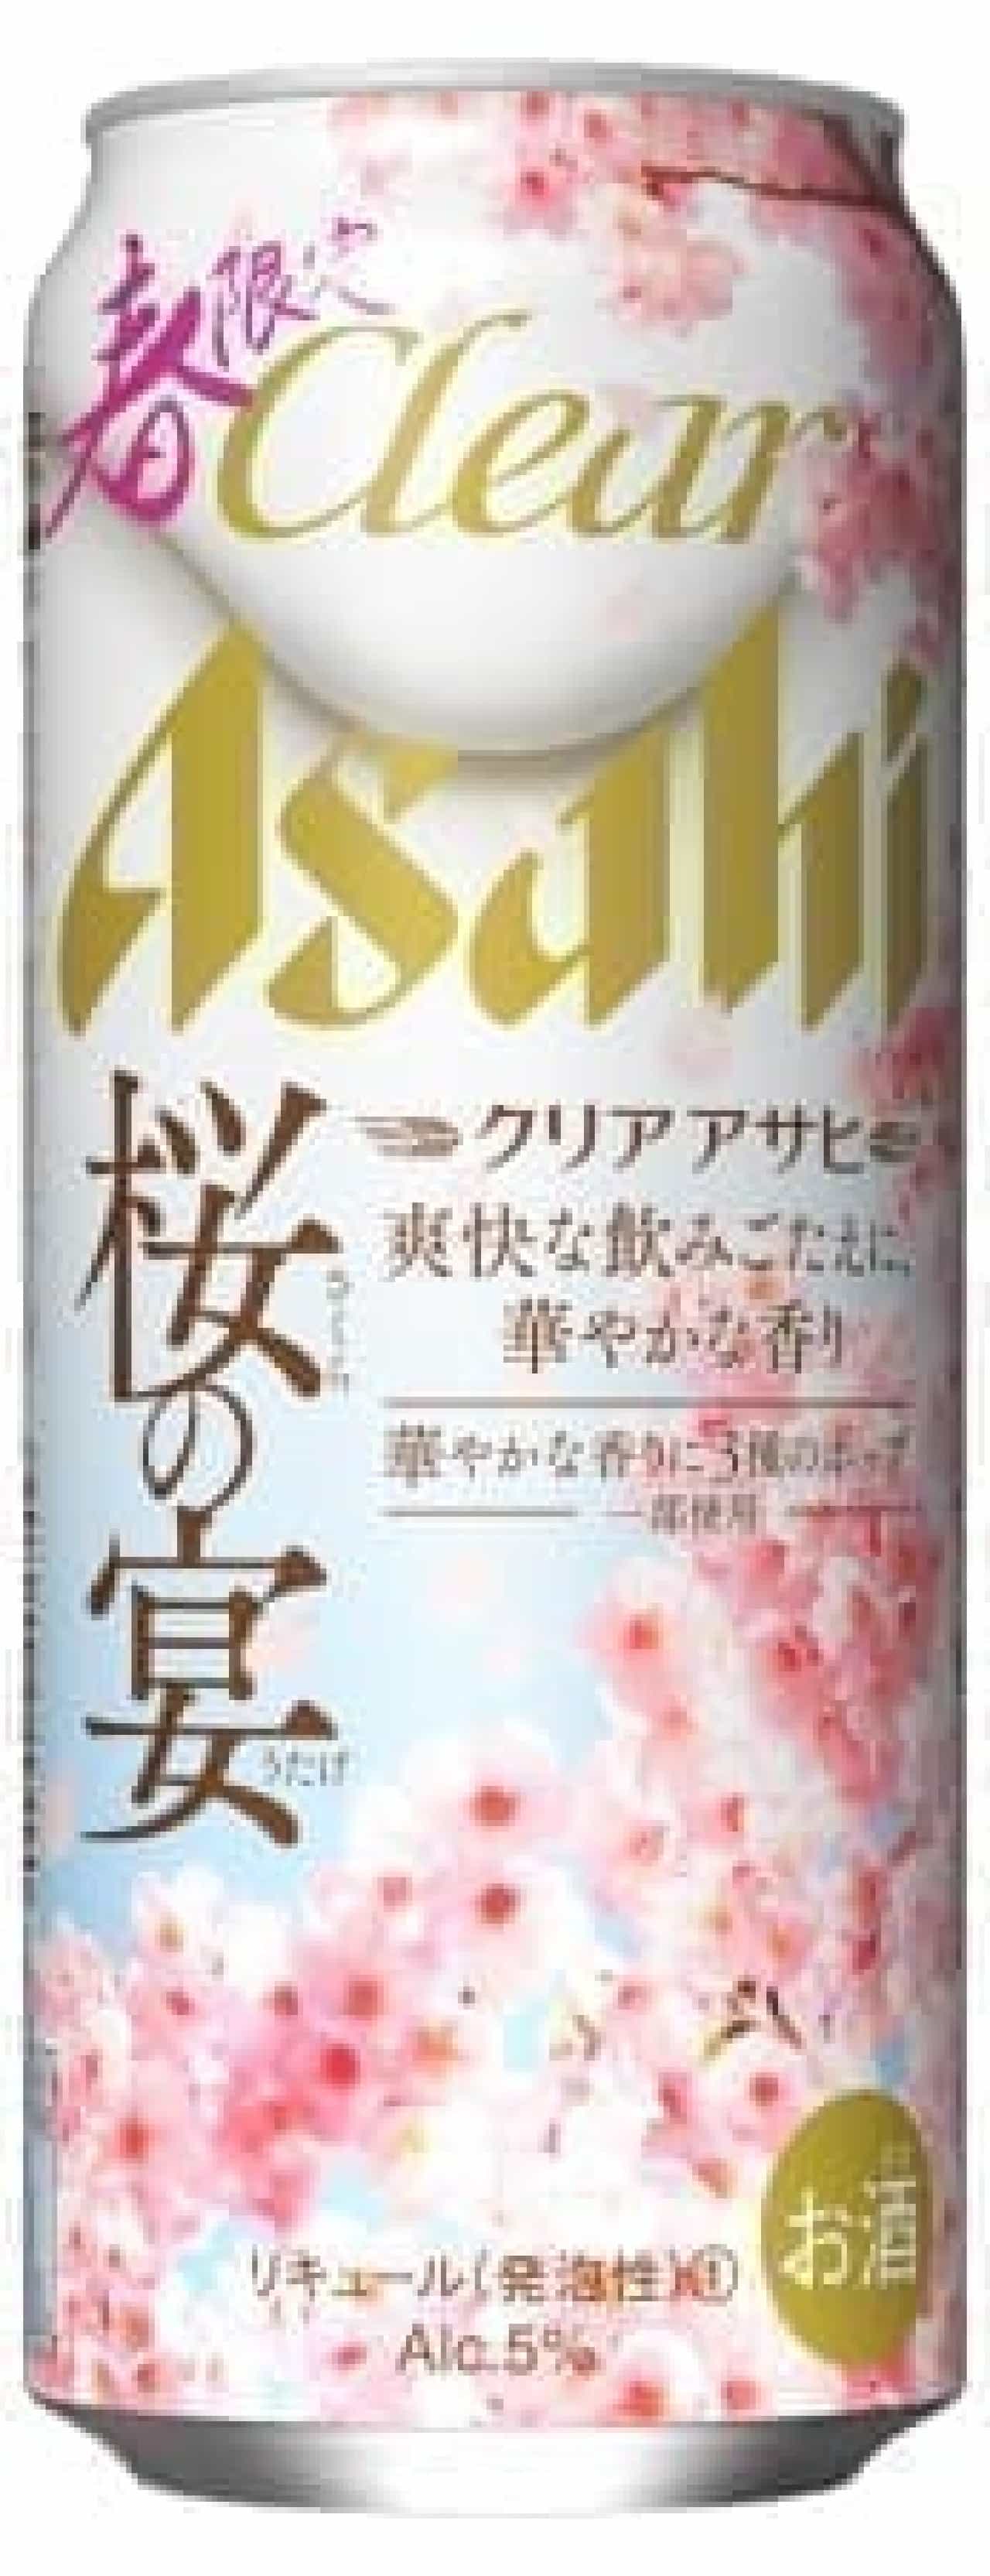 "Ichiban Shibori Limited Spring Design Can", "Clear Asahi Sakura no Utage", etc .-- 3 selections of "Sakura Design" for beer and low-malt beer